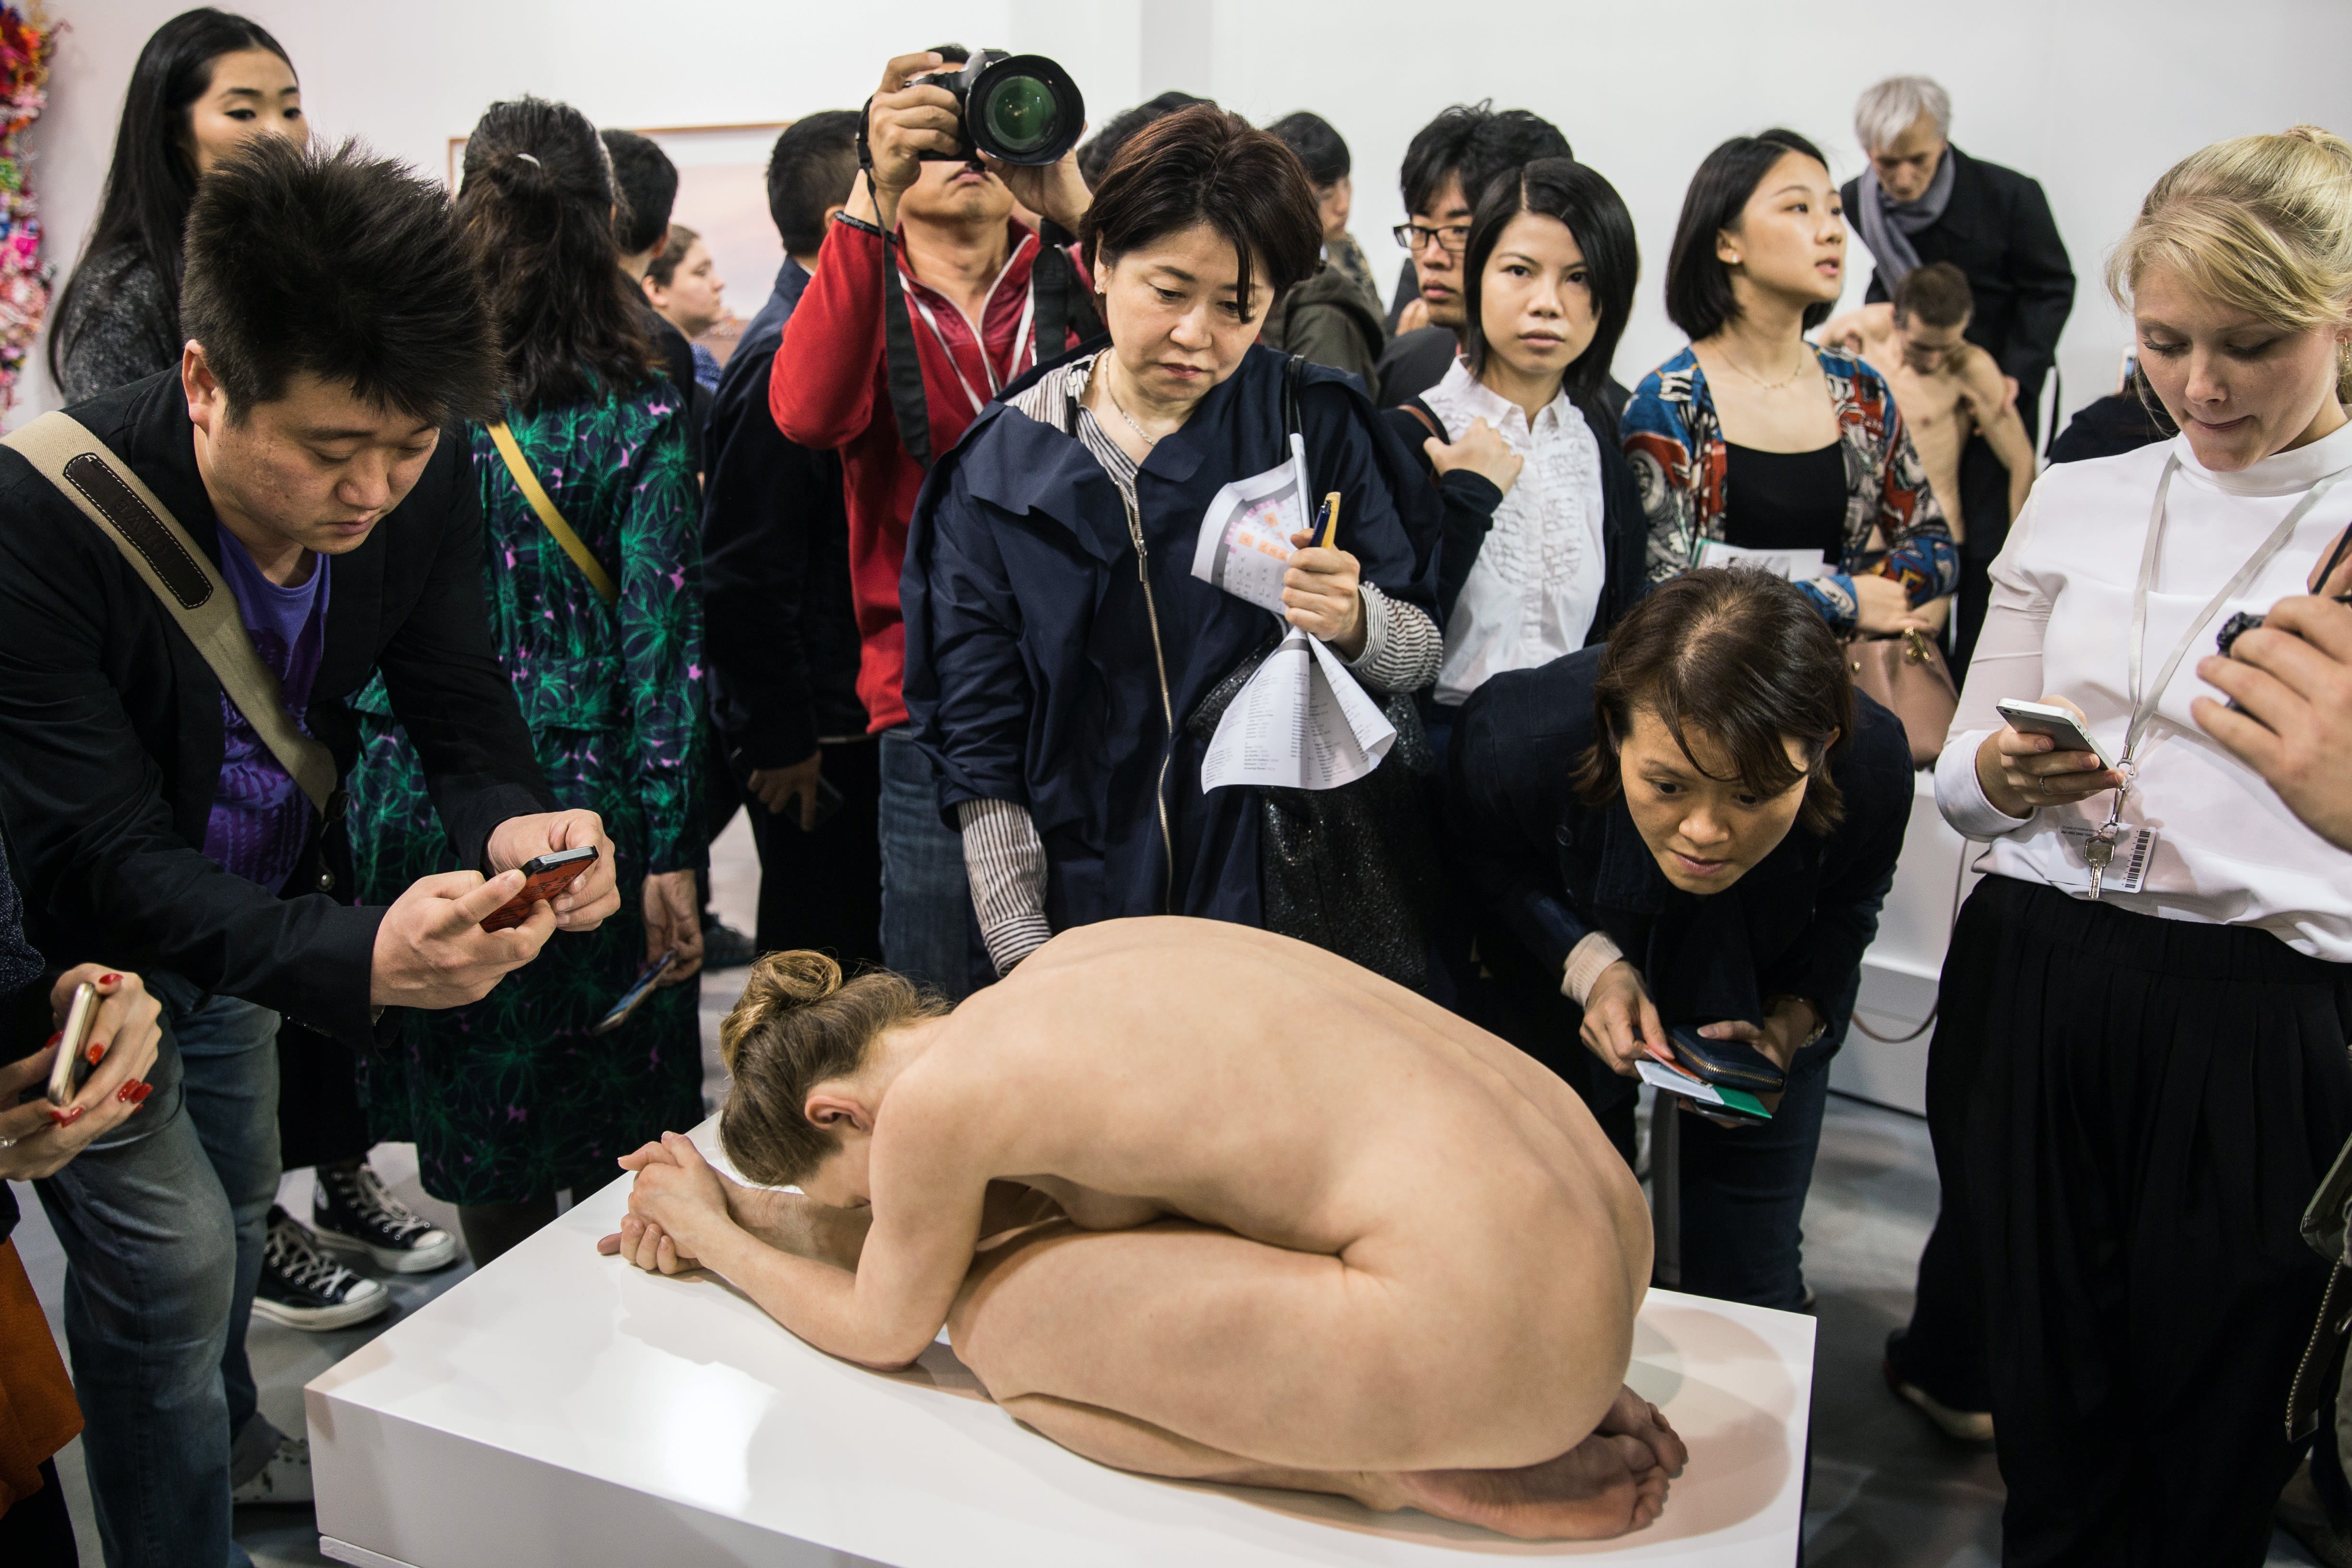 Art Basel Hong Kong's eerily realistic nude sculpture | CNN